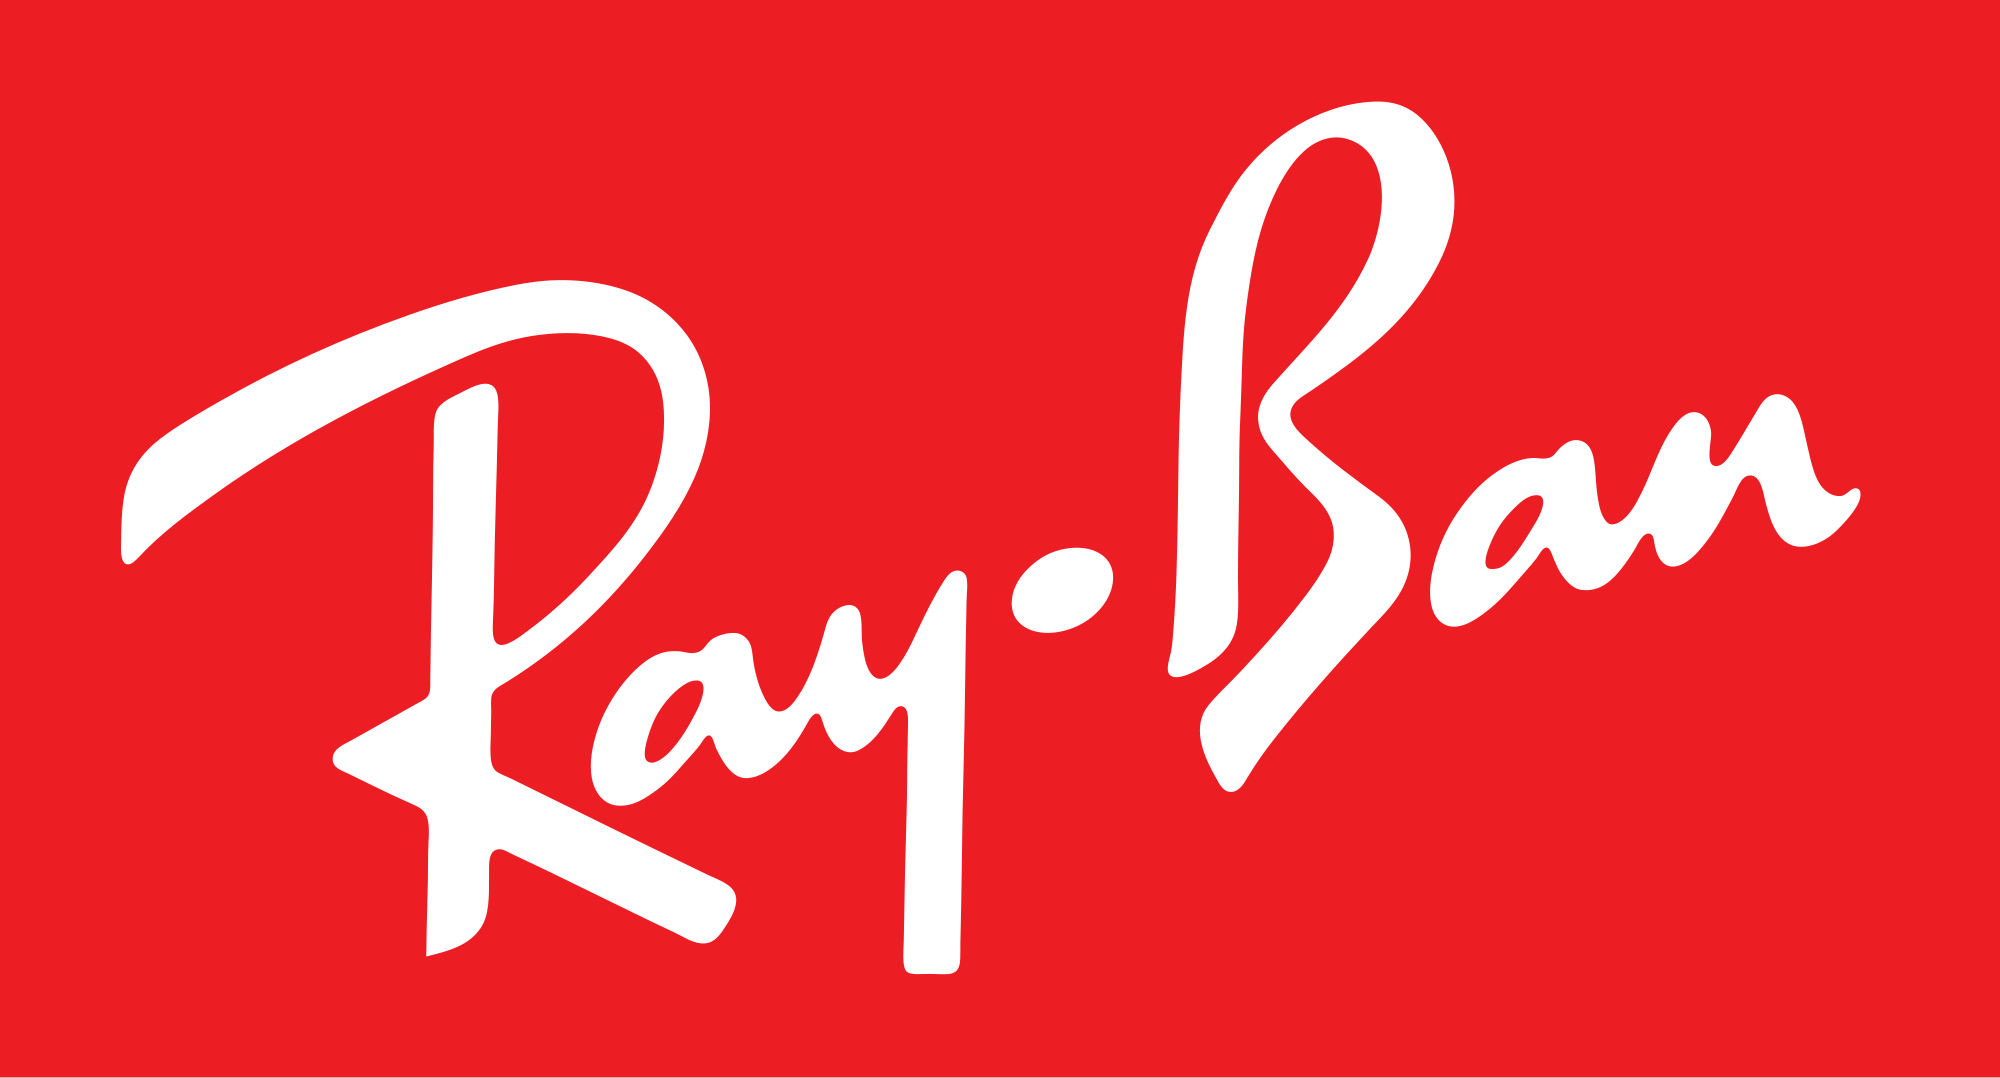 Ray-Ban Wallpapers